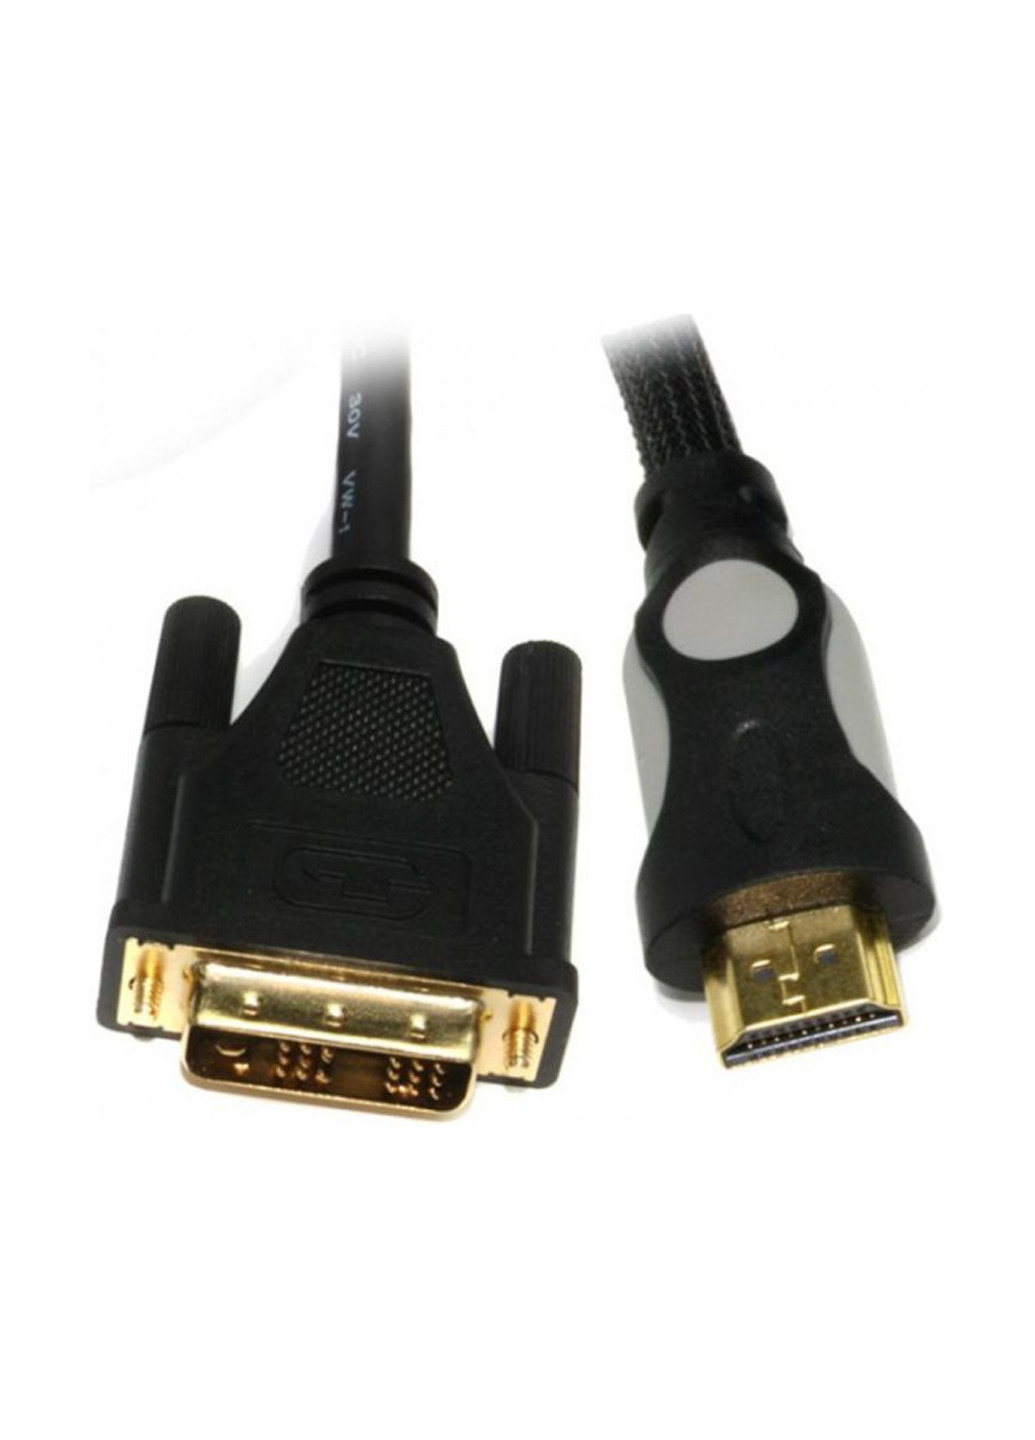 Кабель HDMI-DVI (24 + 1) 3м., M / M, в блістері (VD078-3M) Viewcon hdmi-dvi (24+1) 3м., m/m, в блистере (vd078-3m) (137776184)